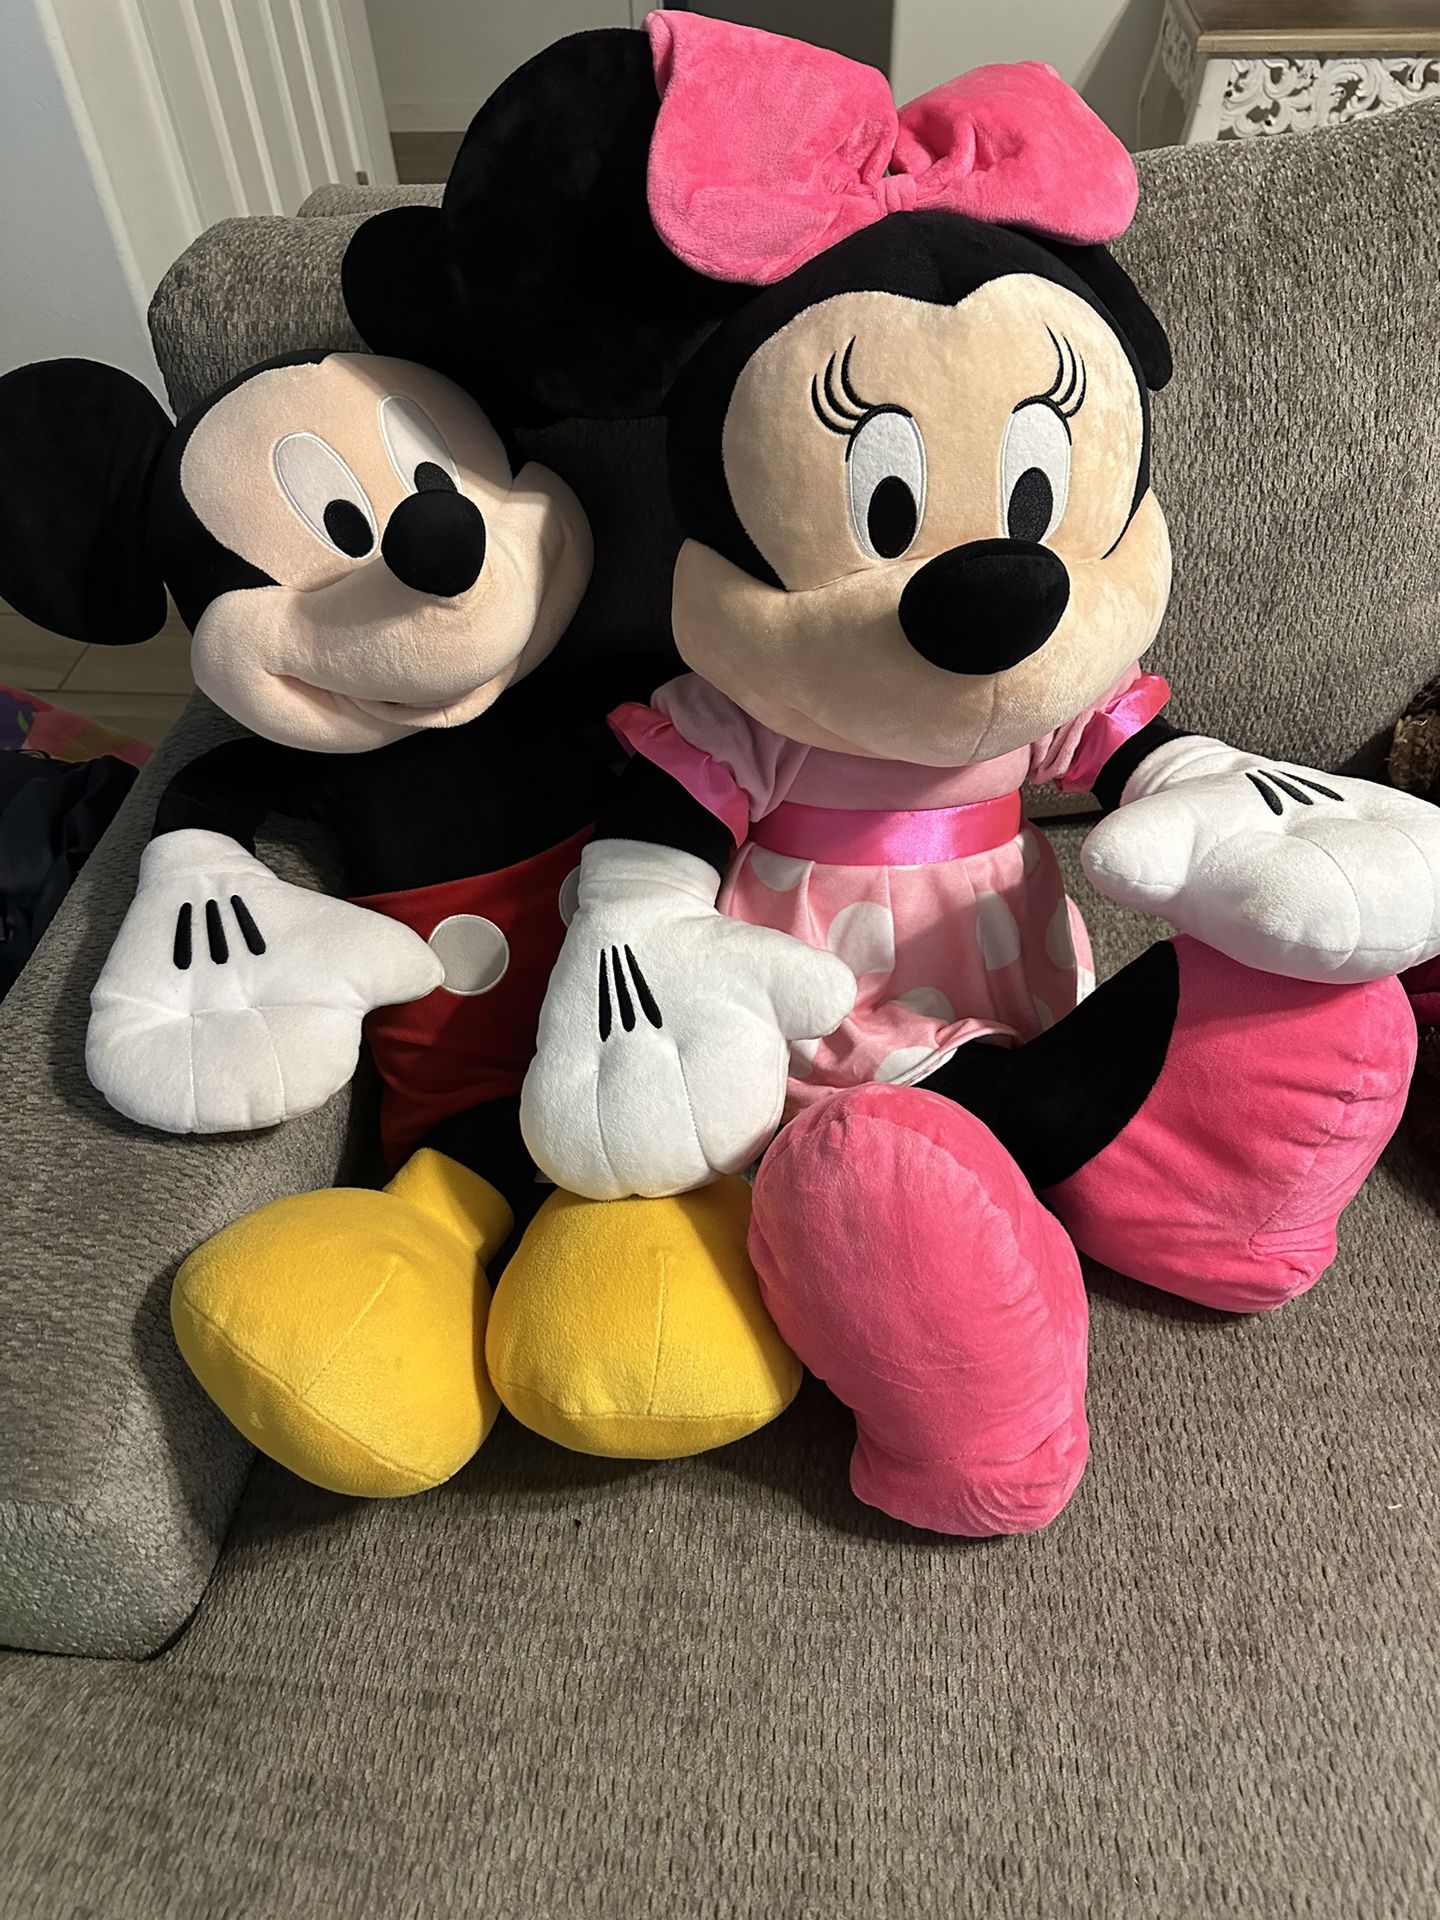 Minnie & Mickey Mouse Stuffed Animals - Like New